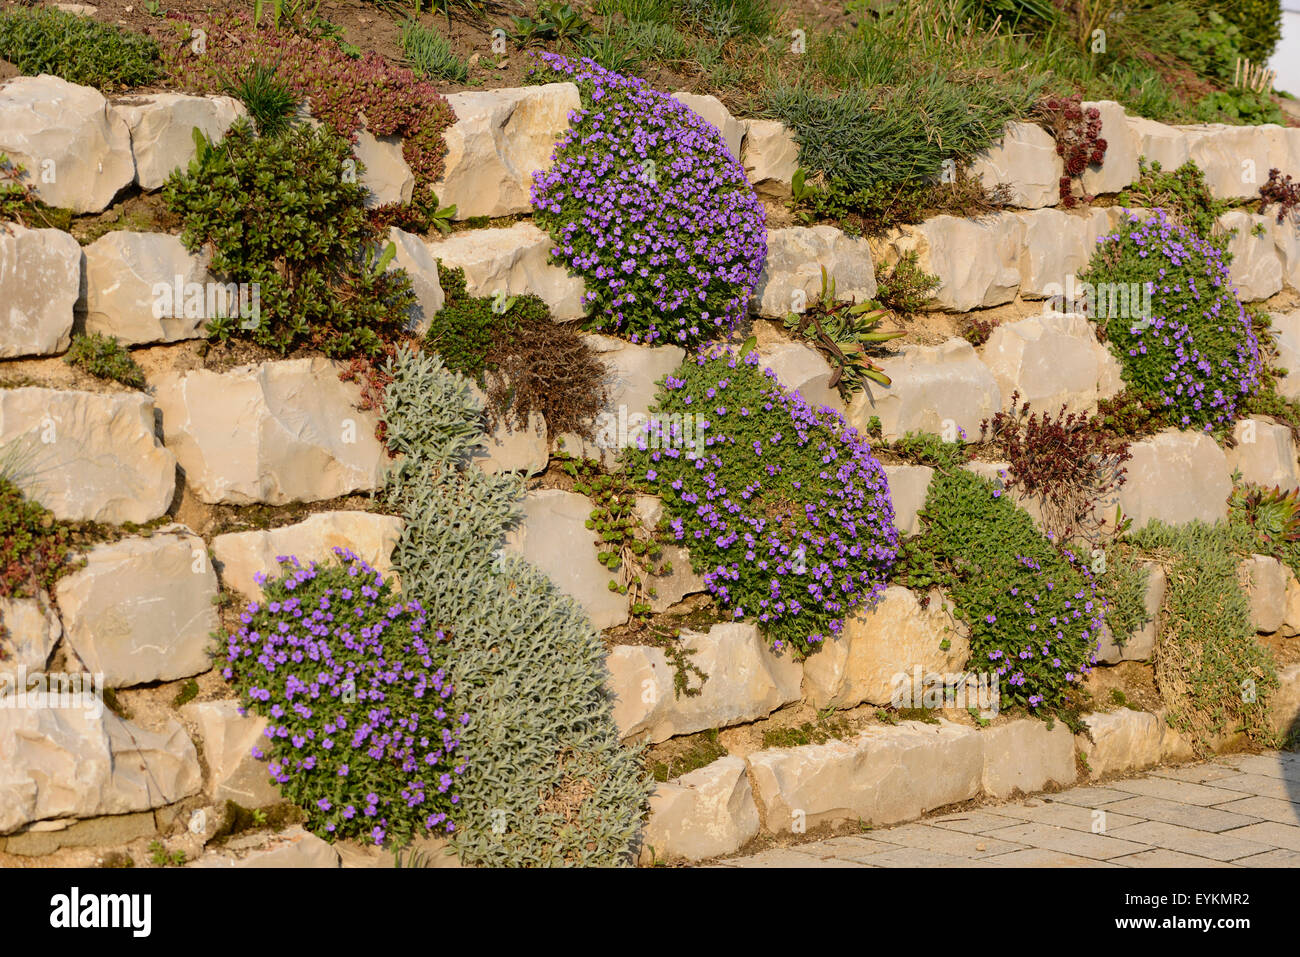 Blue cushions, Aubrieta gracilis, stone wall, blossoms, Stock Photo